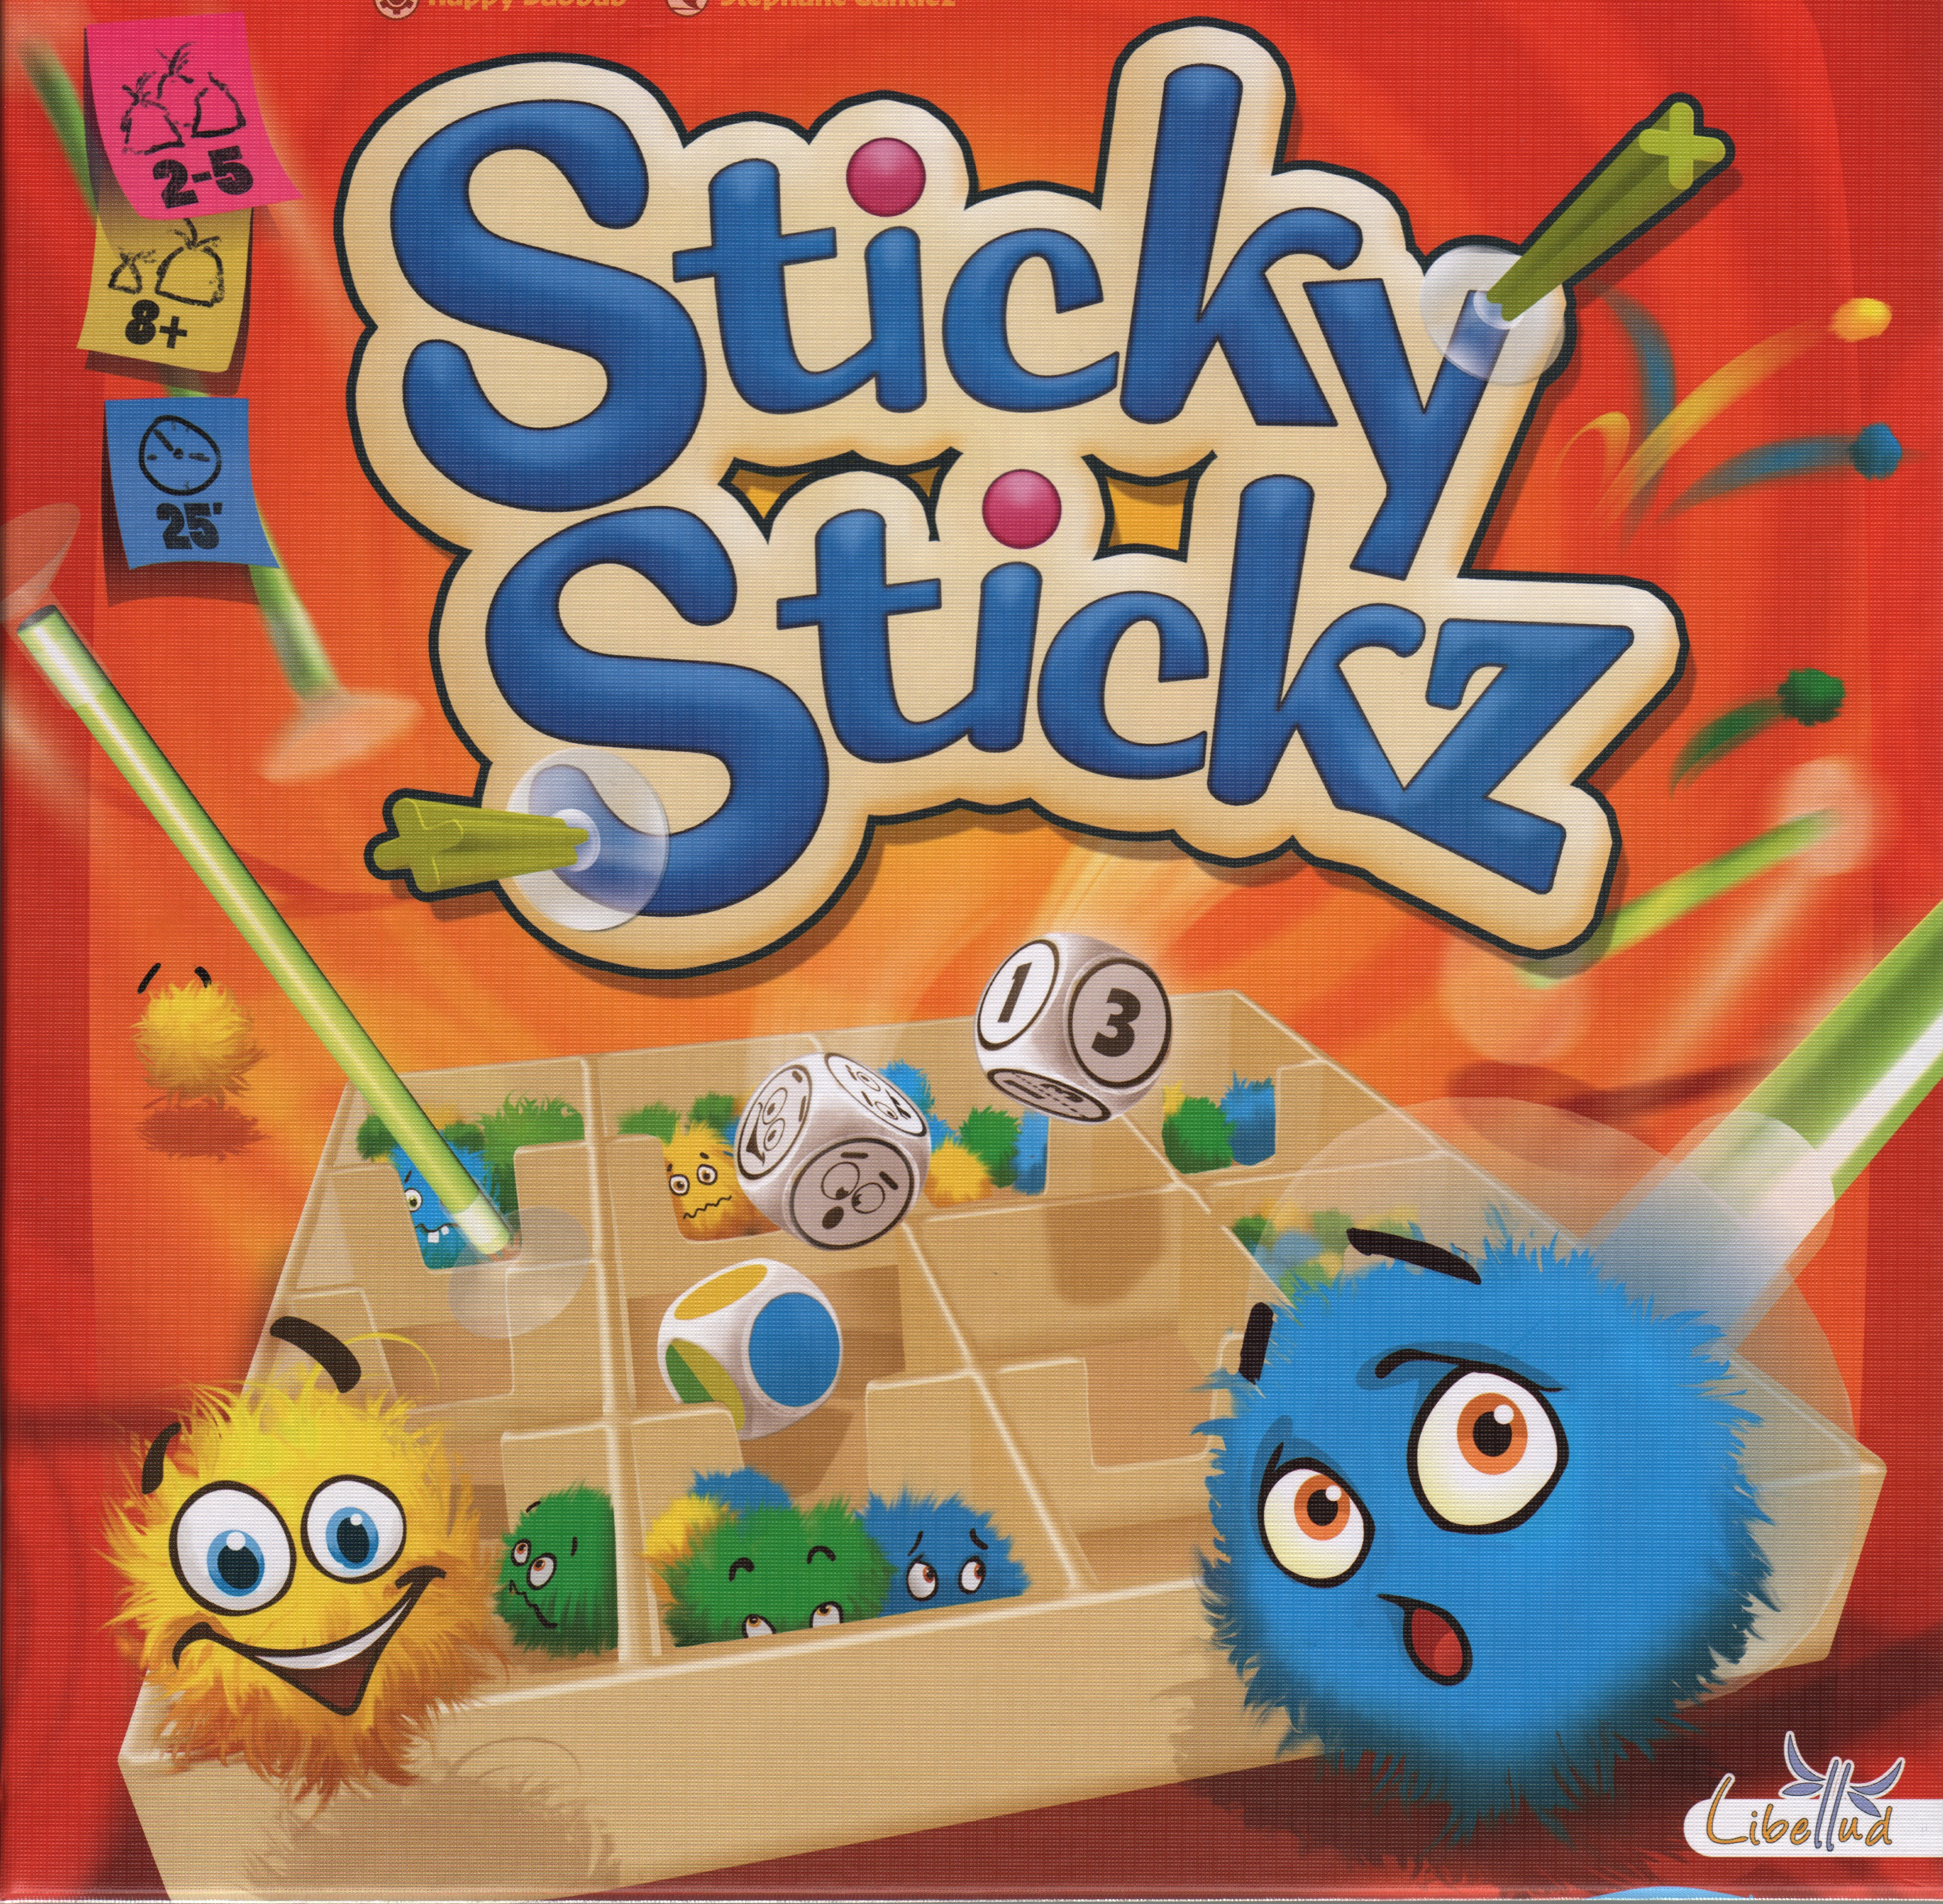 Sticky Stickz